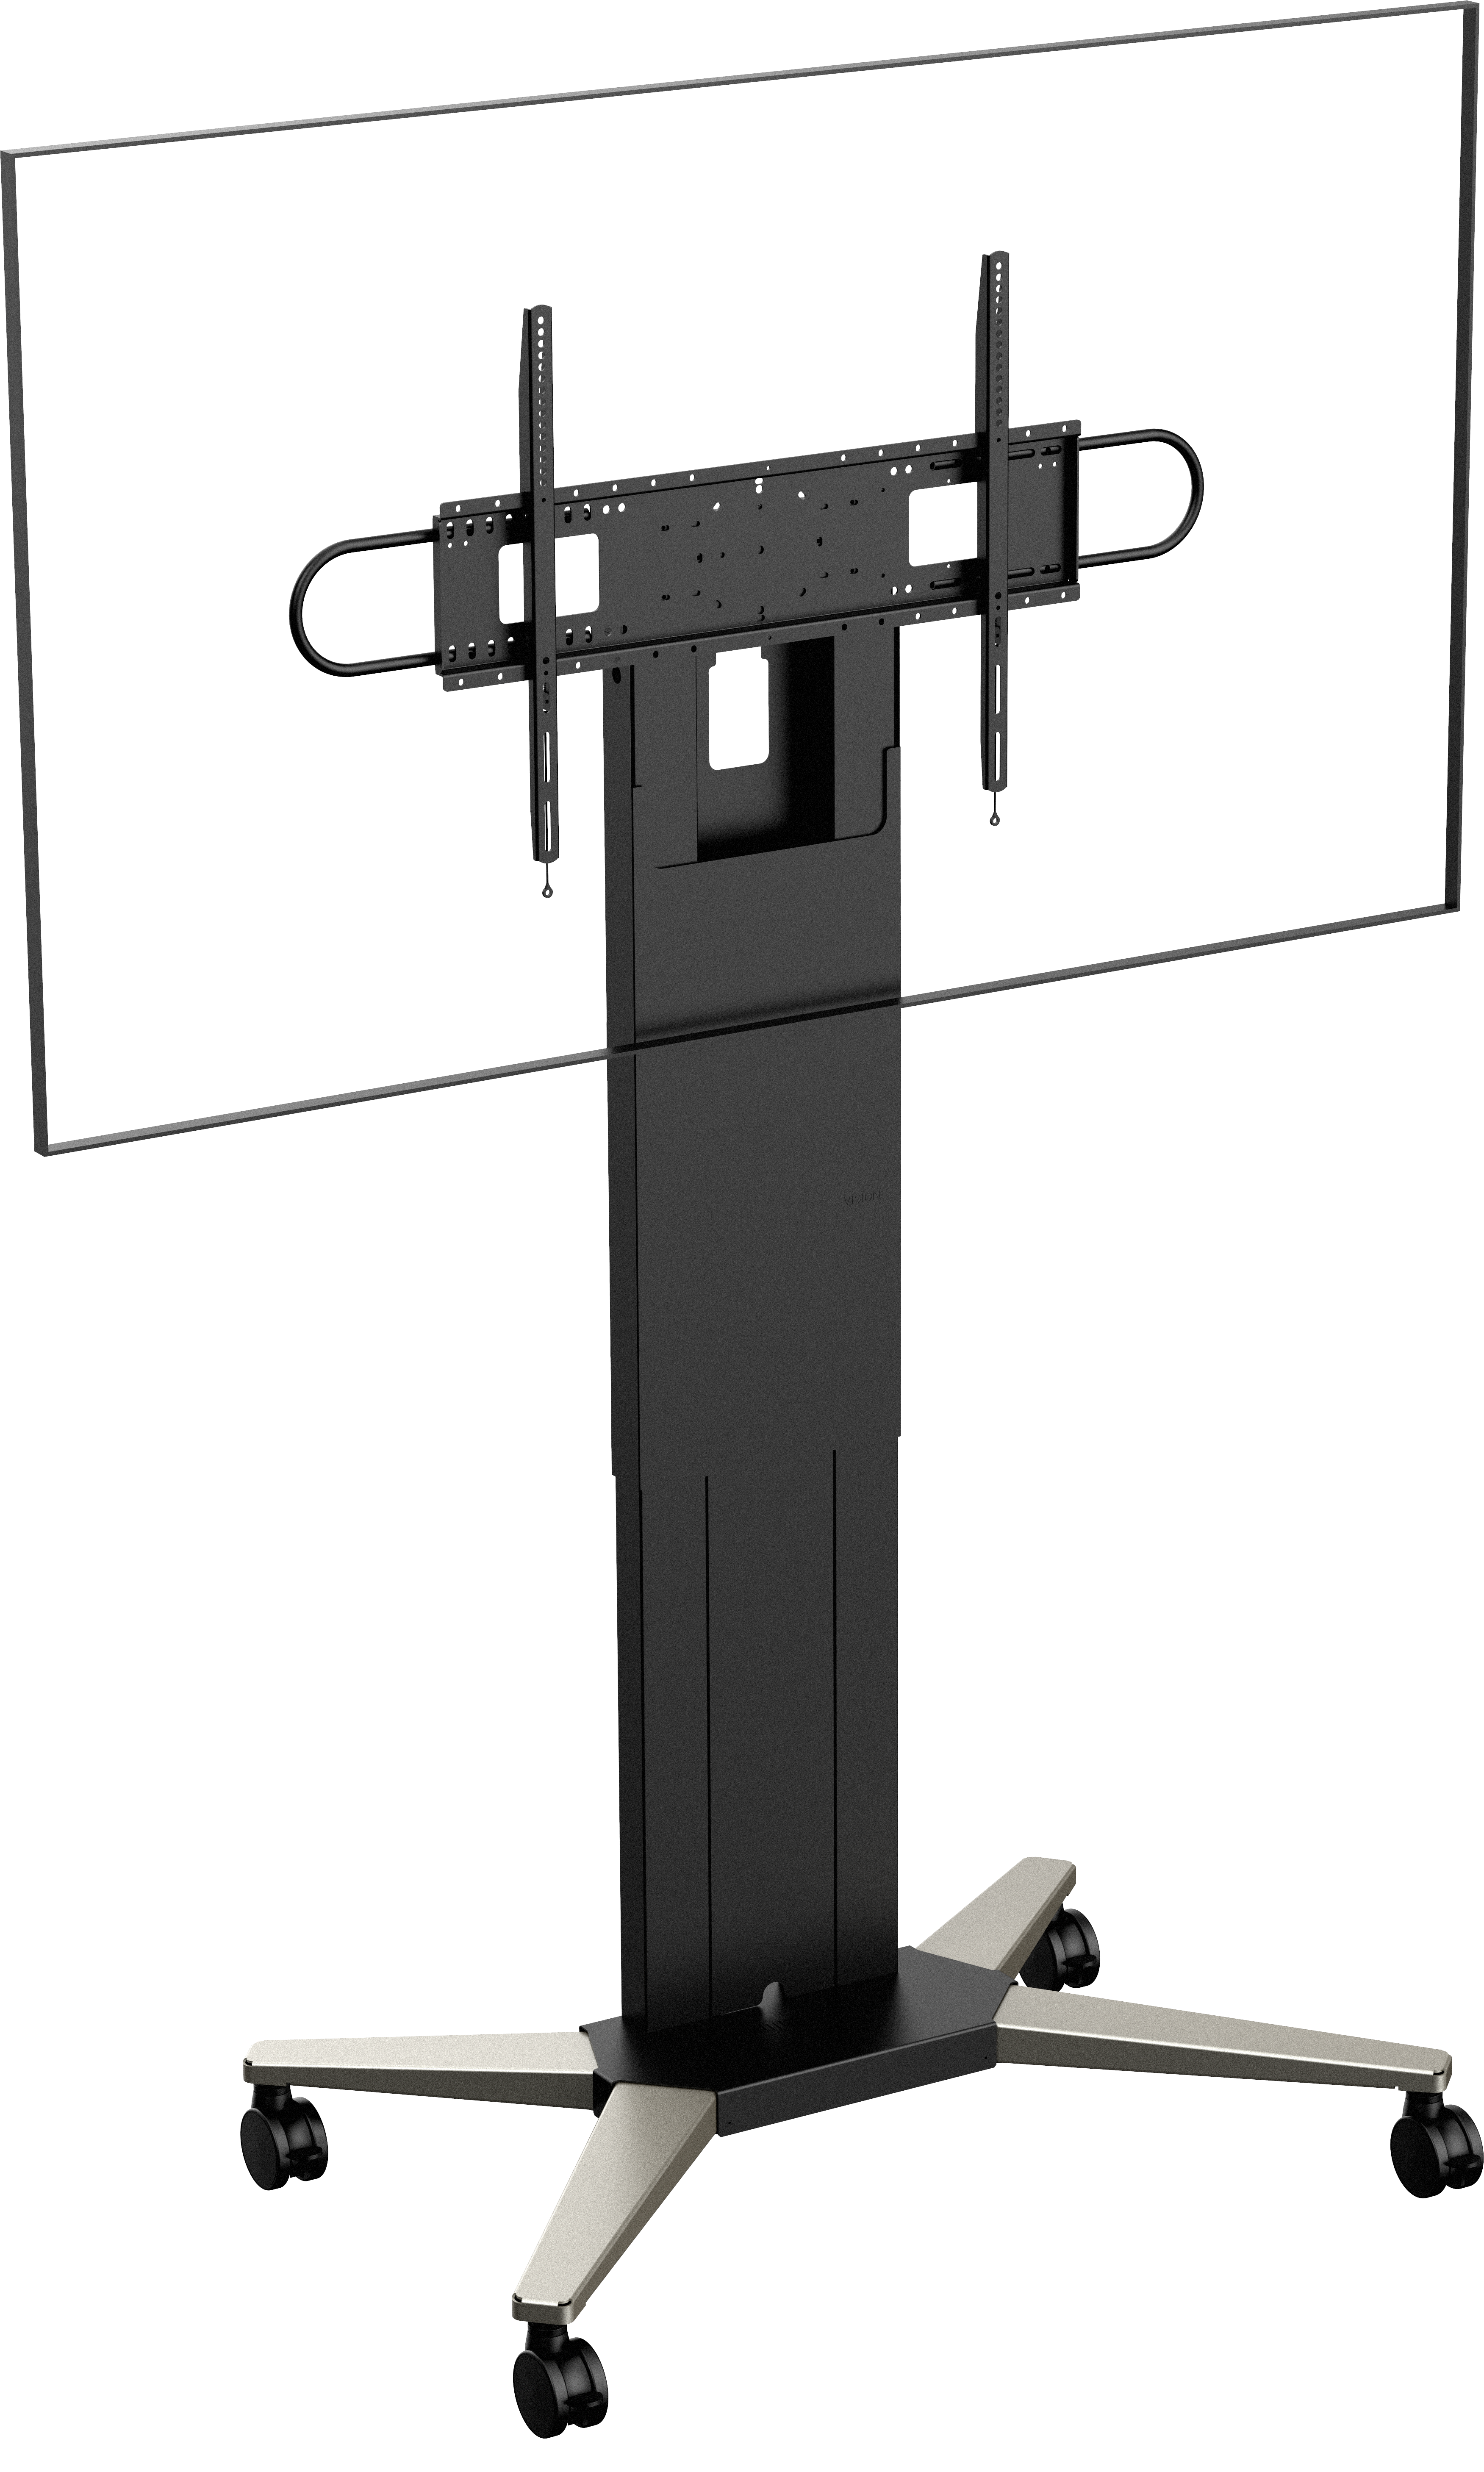 An image showing Trolley voor flatscreens